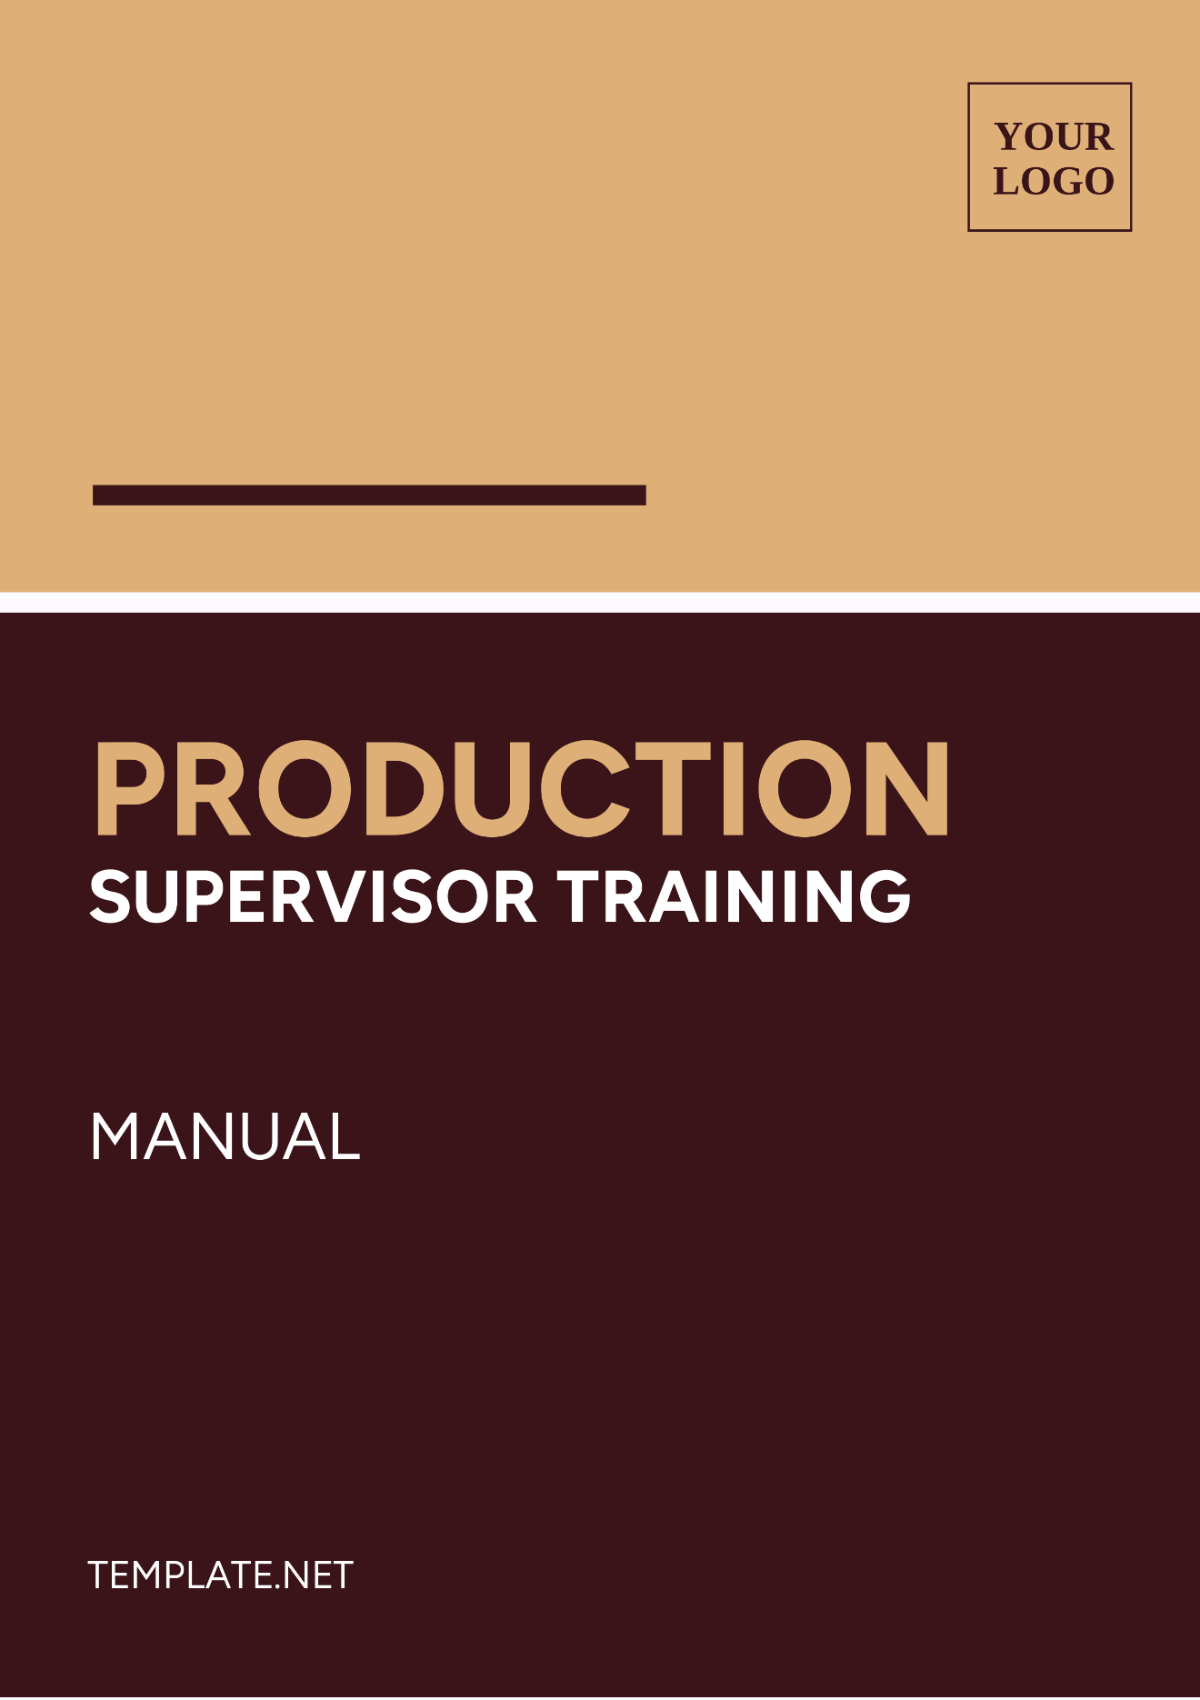 Production Supervisor Training Manual Template